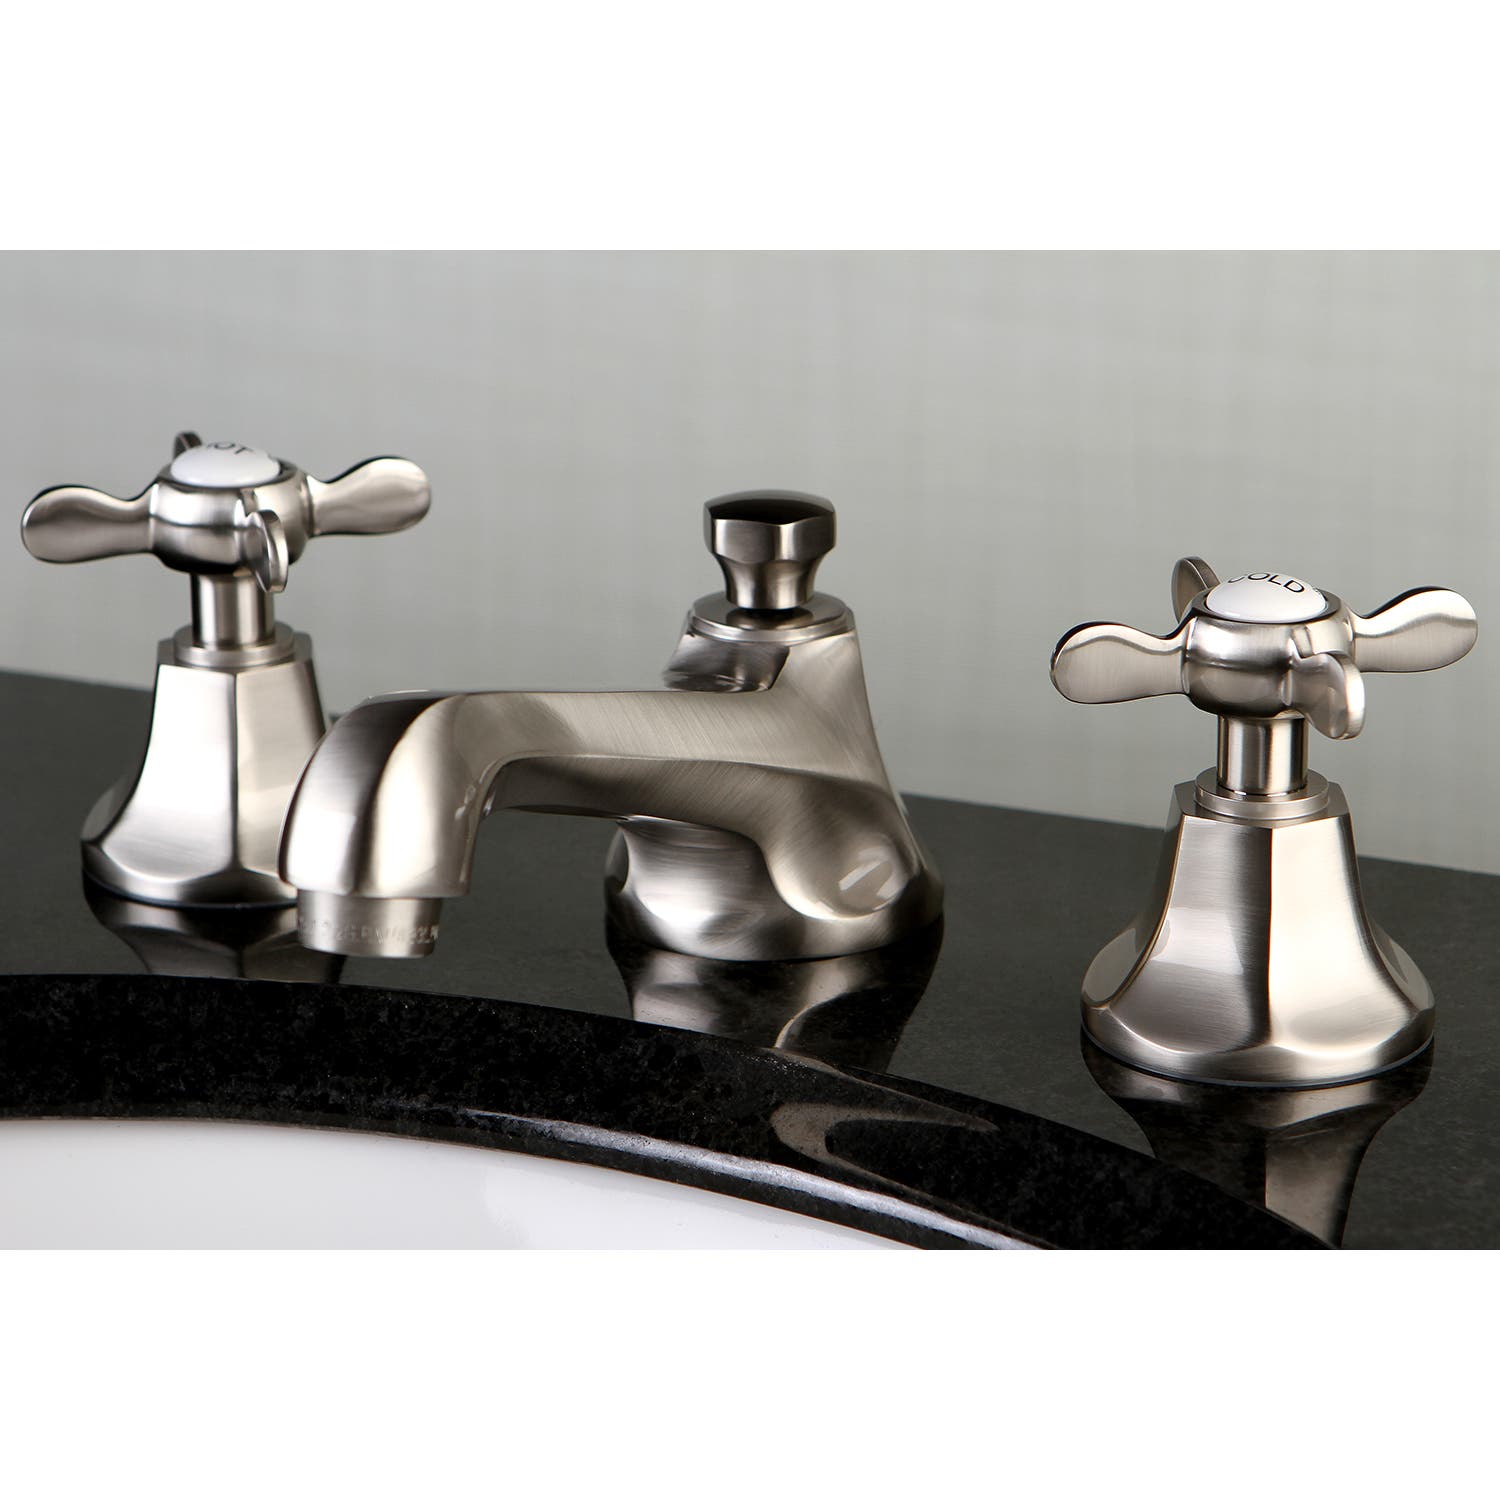 Brushed Nickel Widespread Bathroom Faucet Feature: KS4468BEX